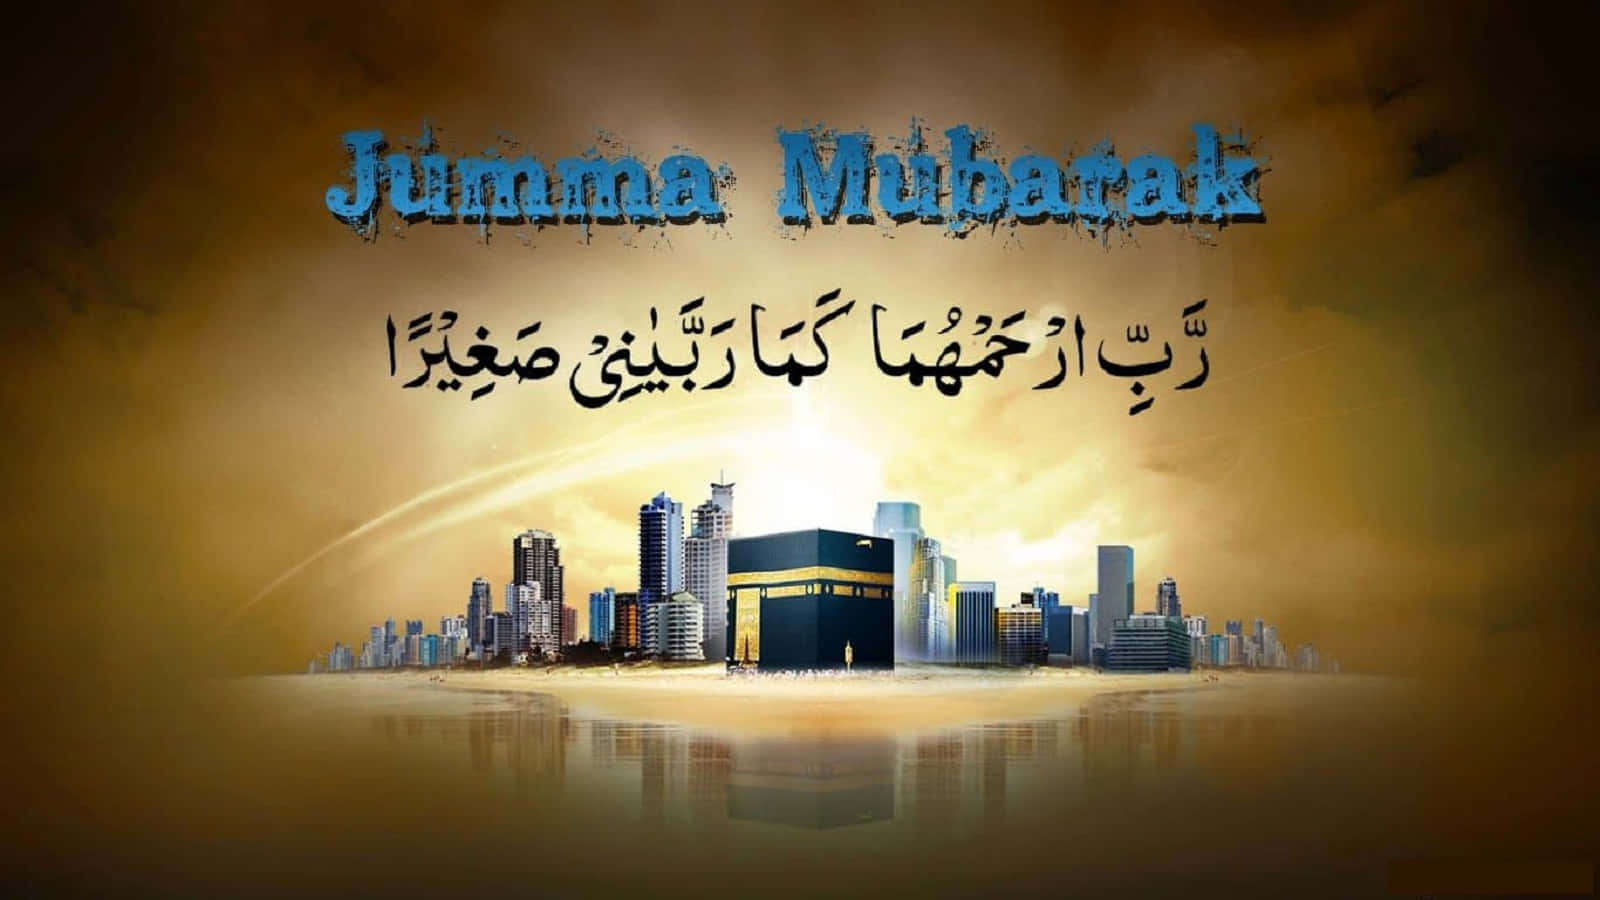 Beautiful Jumma Mubarak background with inspirational Islamic quote